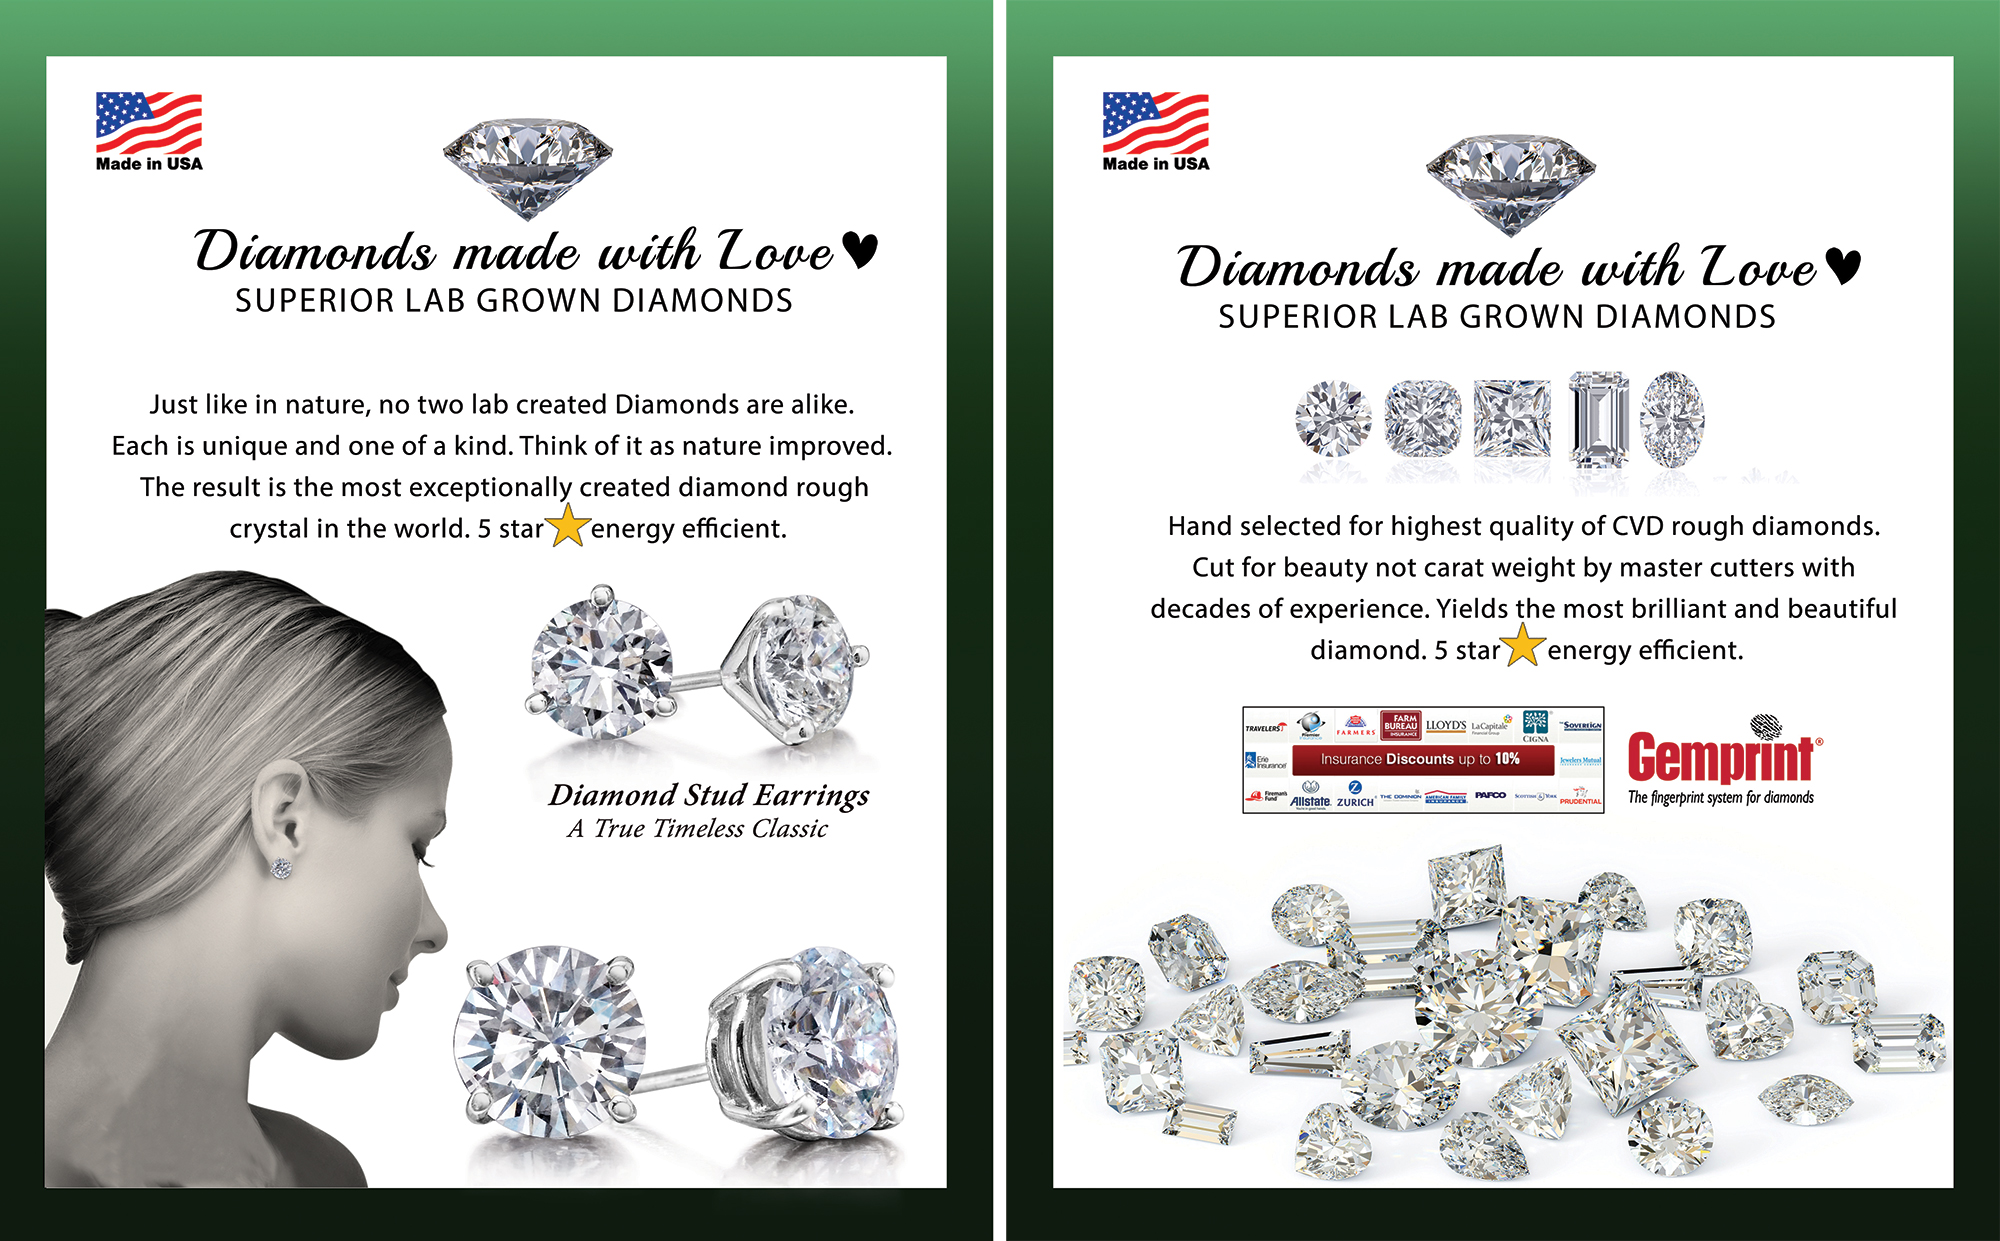 GN Diamond Introduces, “Diamonds Made with Love”